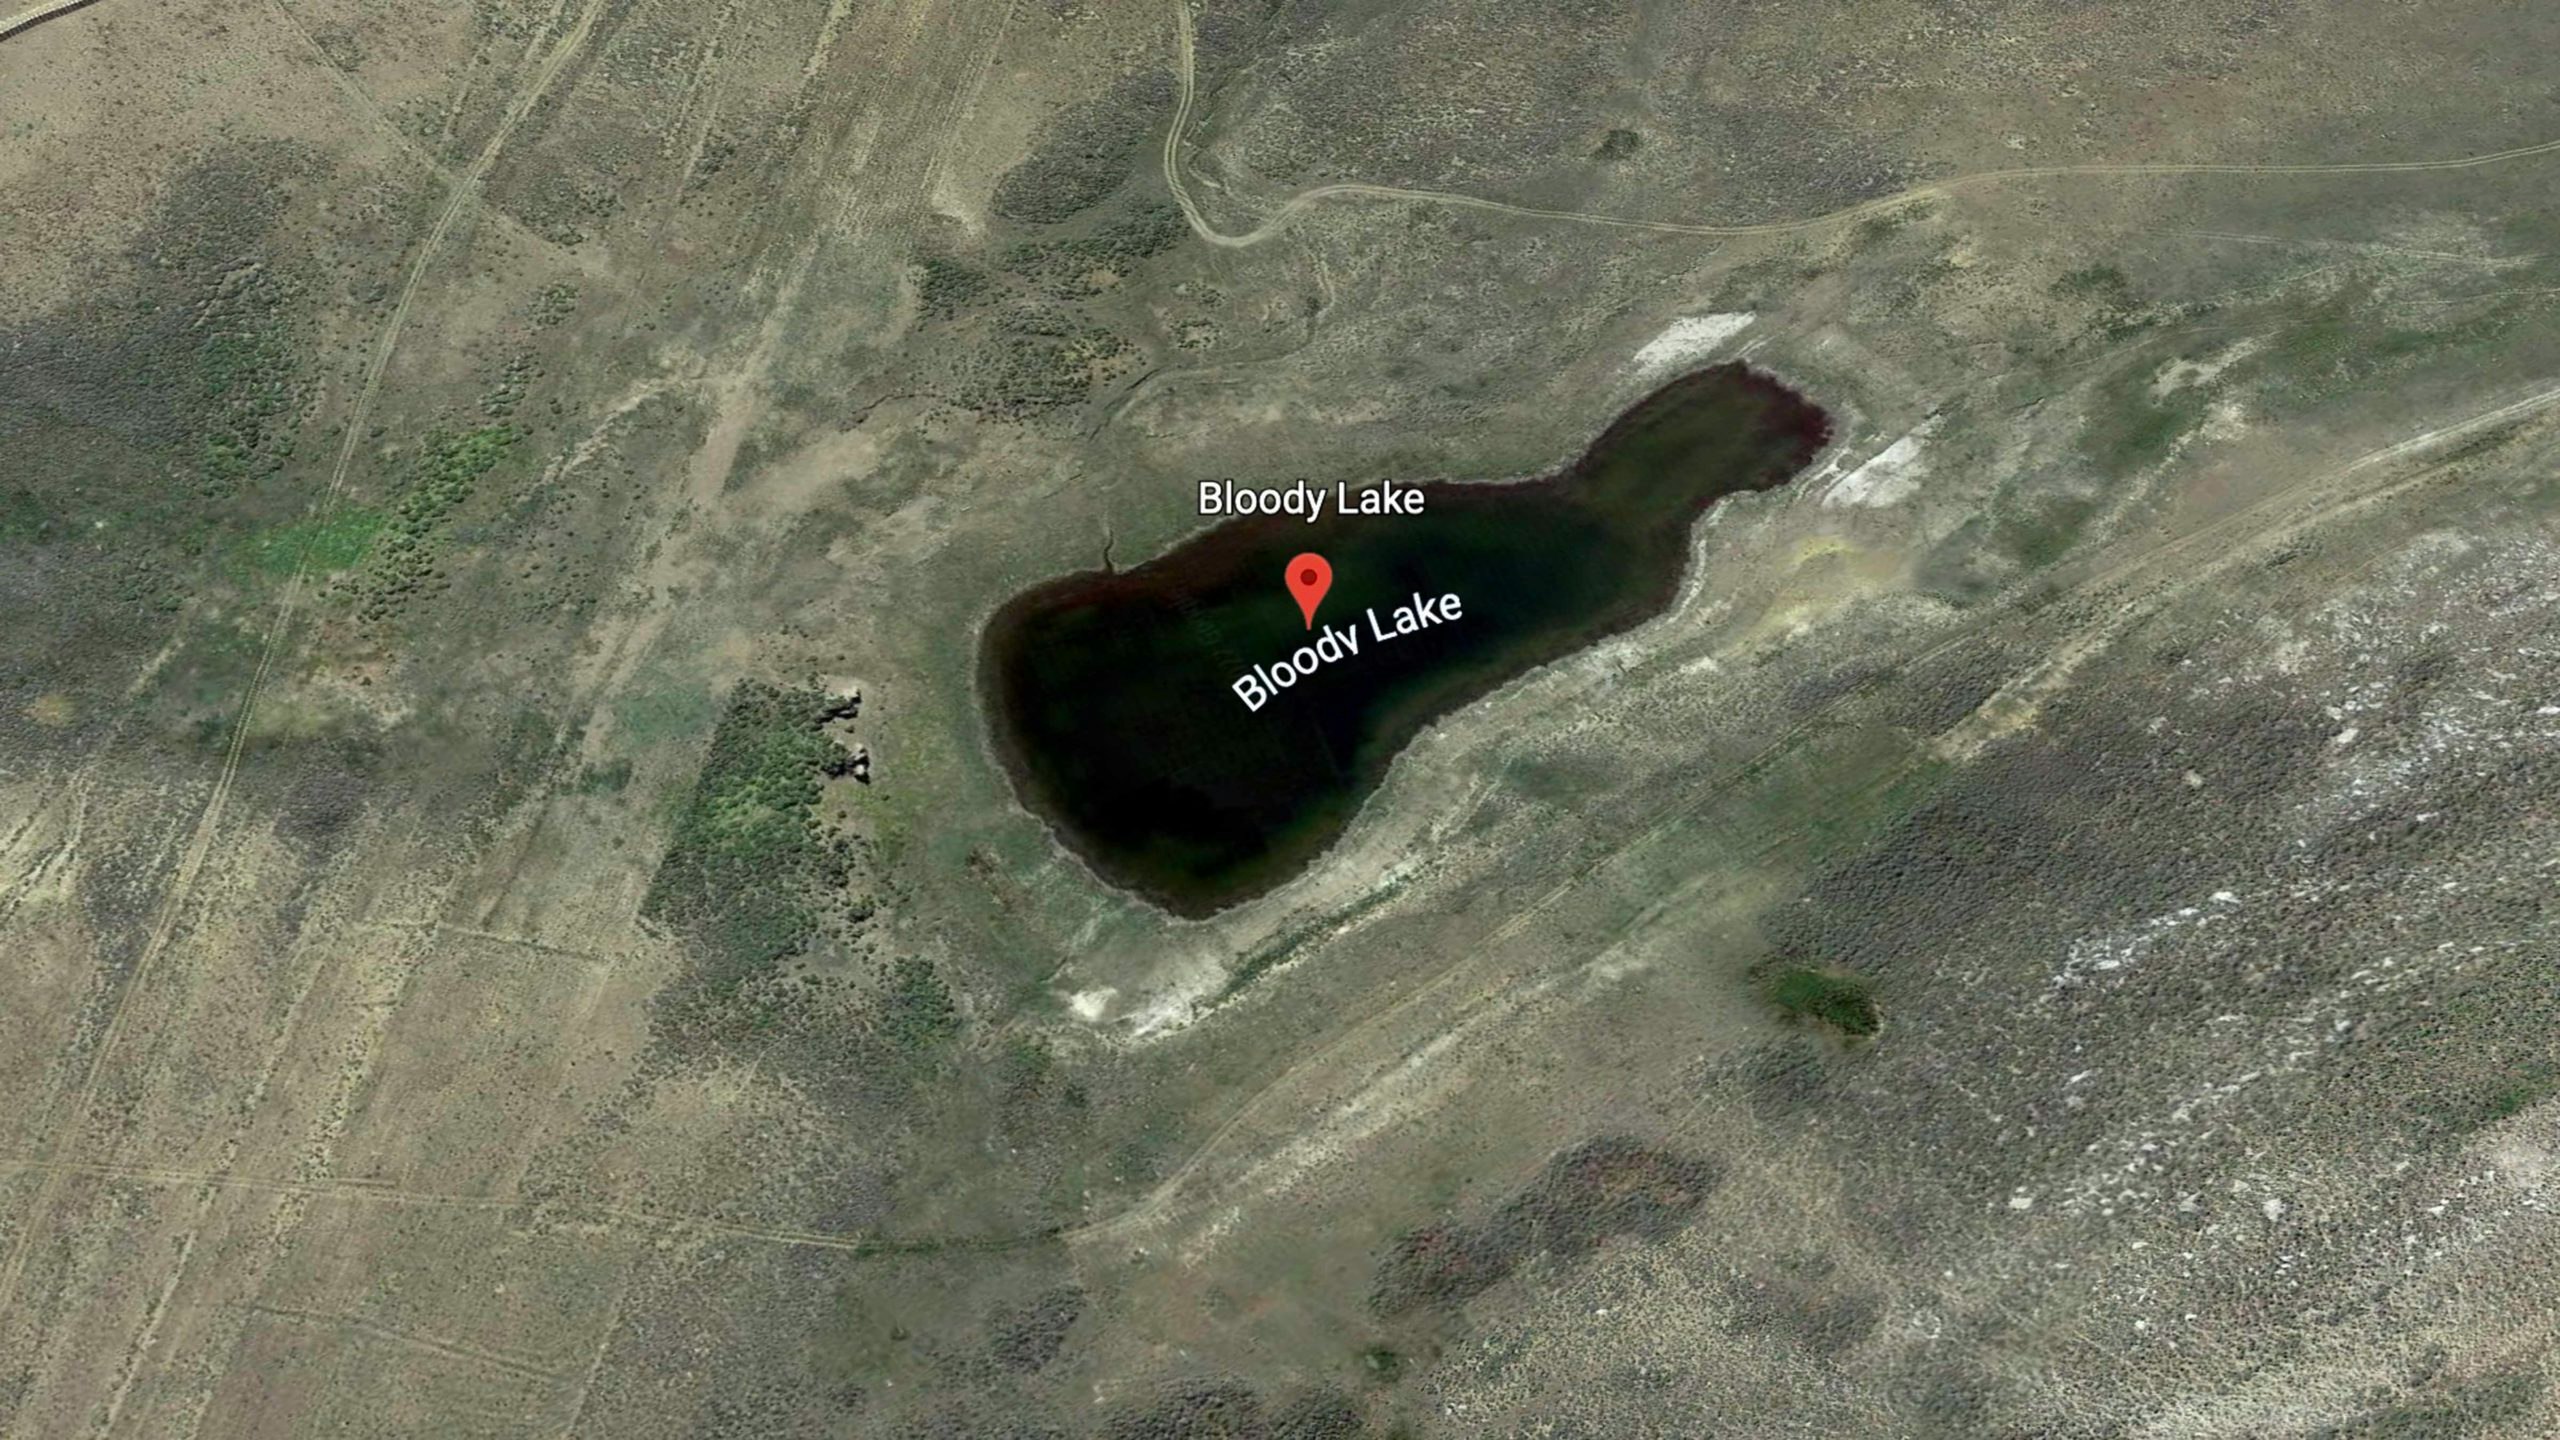 Bloody lake google earth 10 6 22 scaled